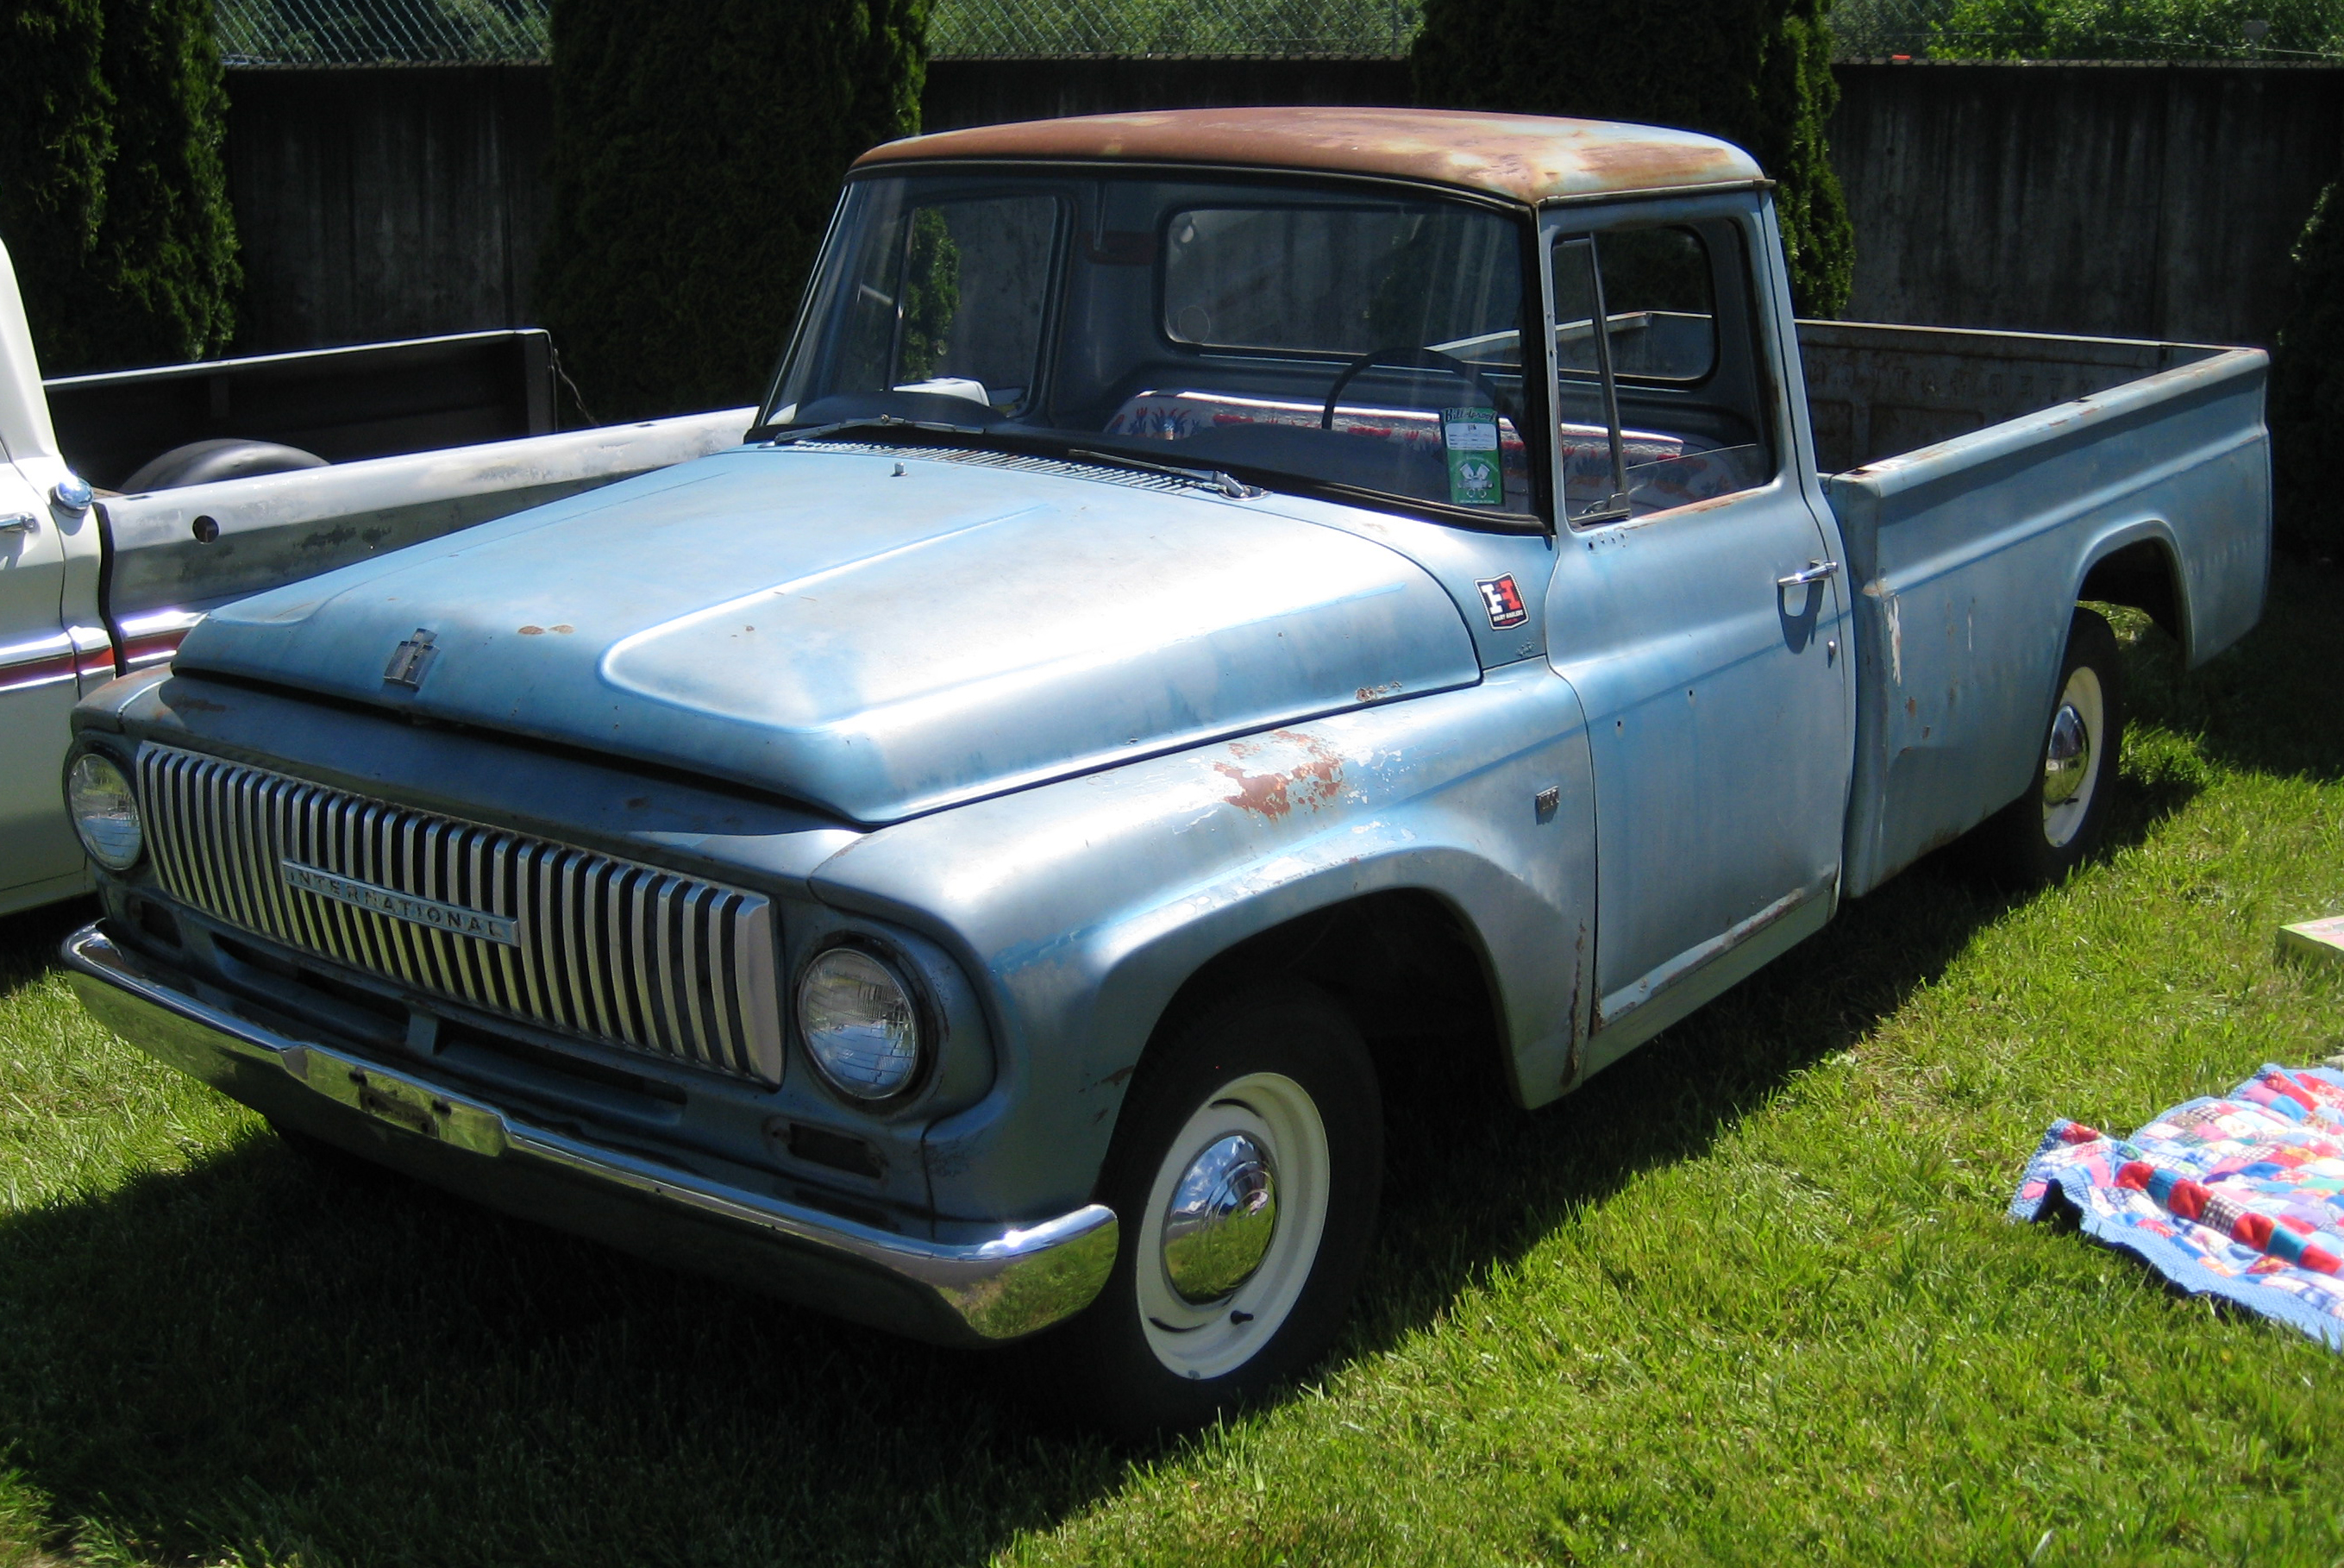 International Pickup 1959 #11